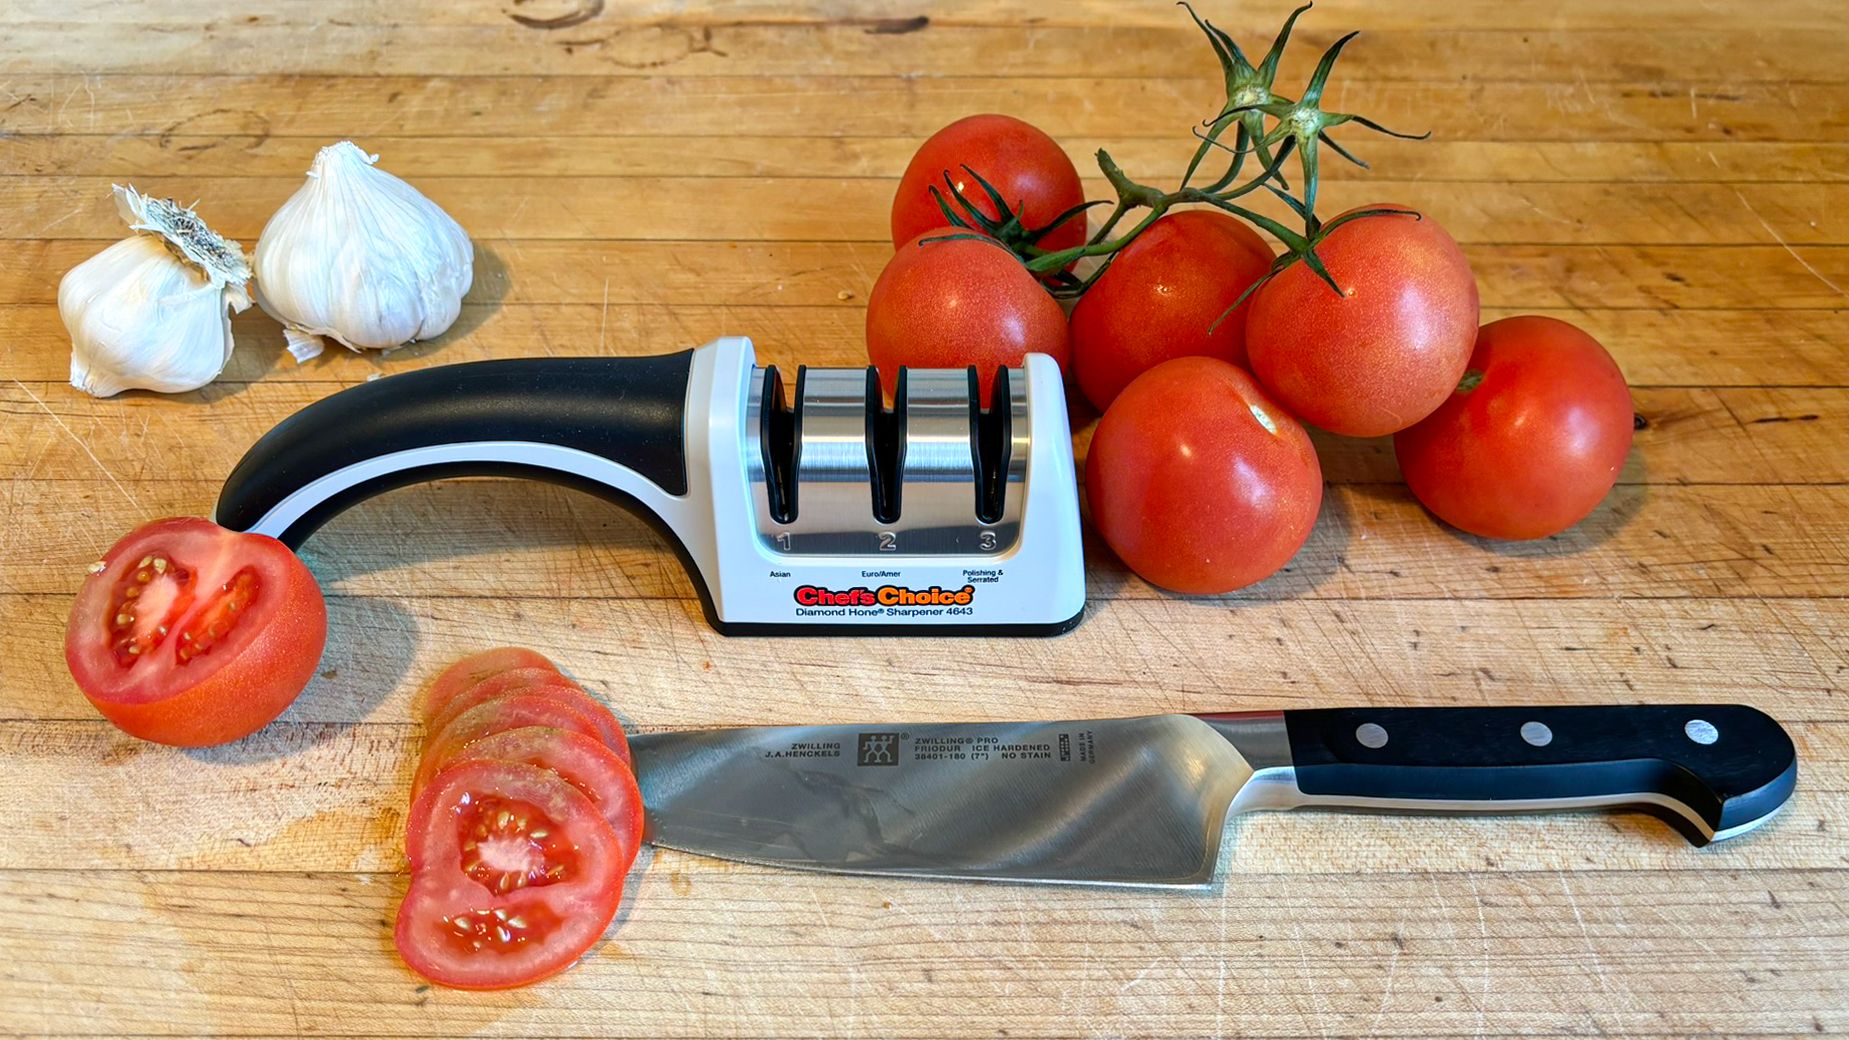 https://media.cnn.com/api/v1/images/stellar/prod/chefschoice-manual-best-knife-sharpener-cnnu-006-20231128165109687.jpg?c=original